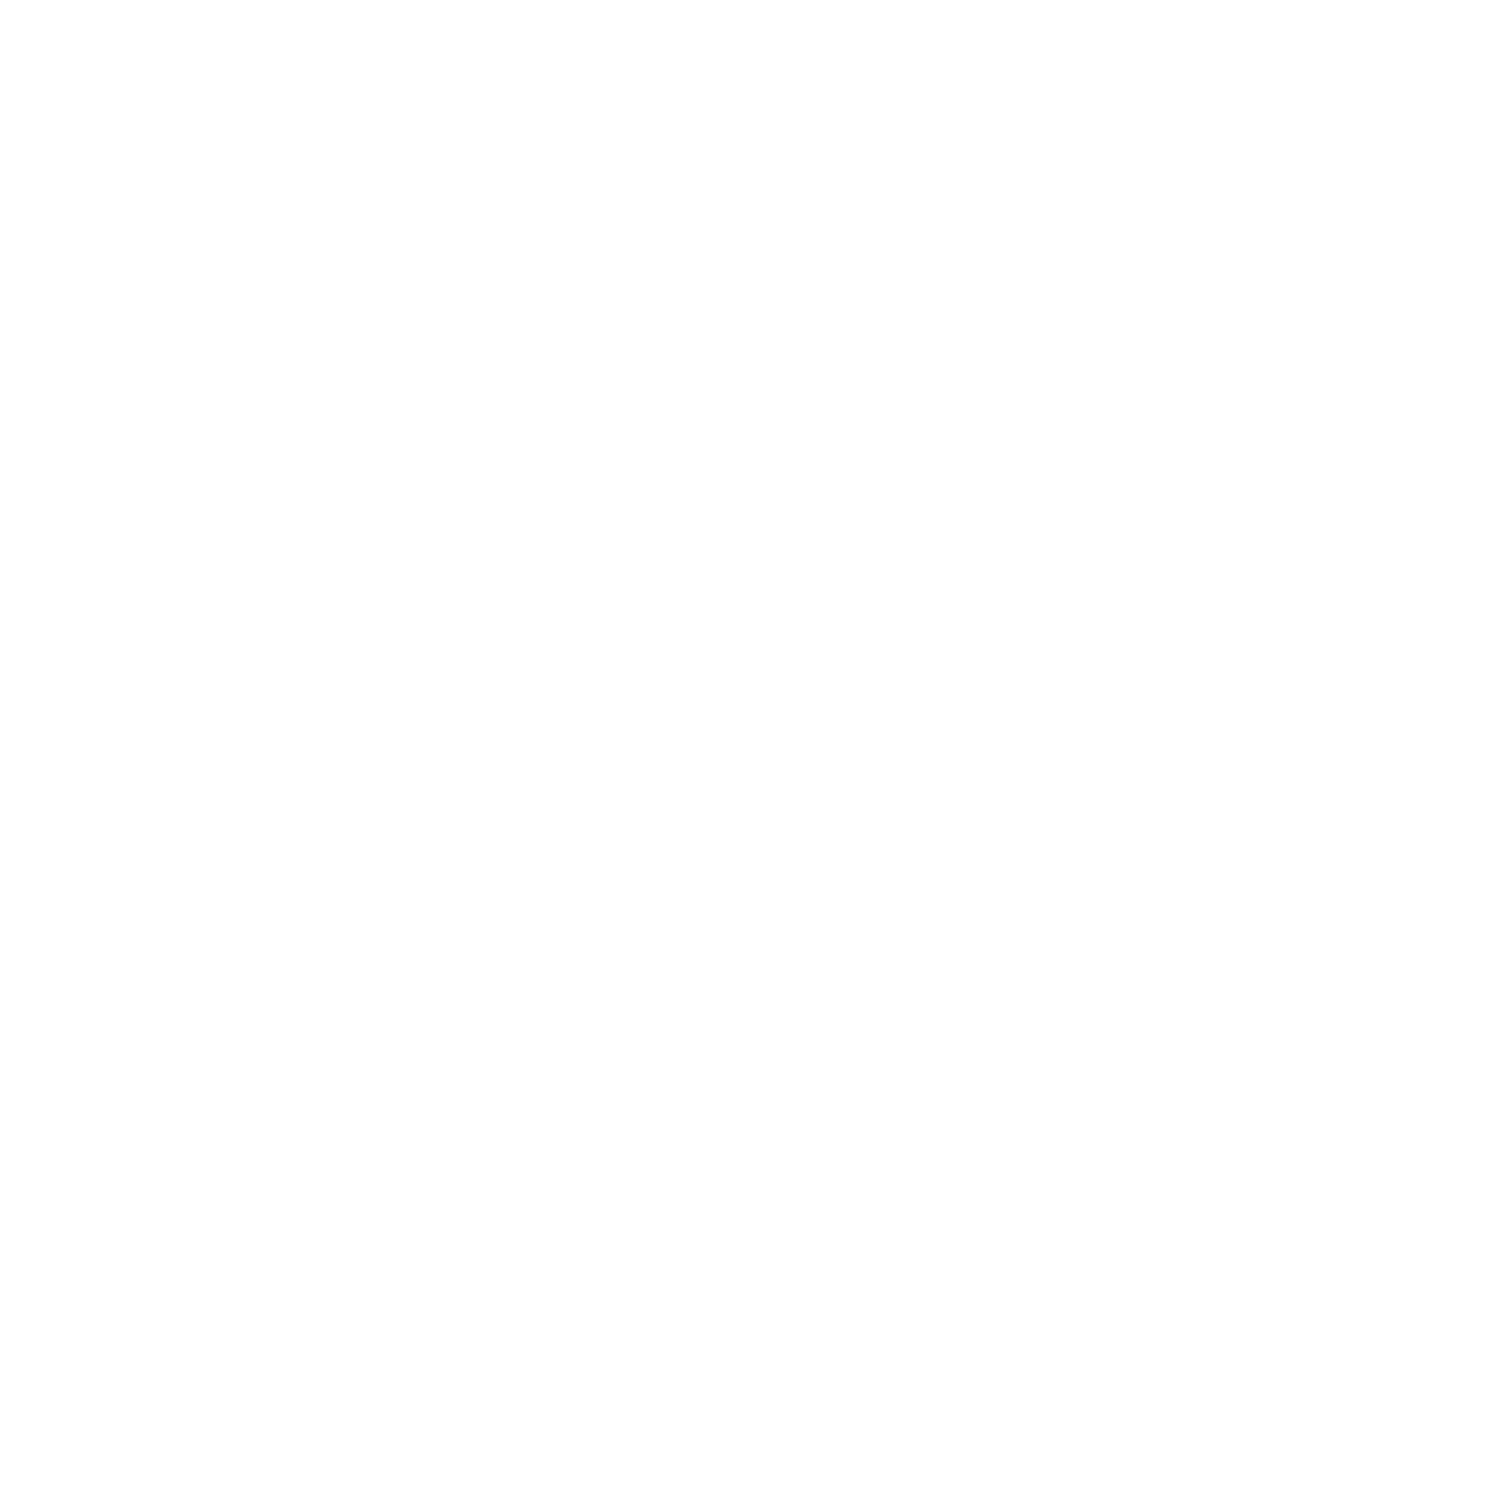 Diners Choice logo